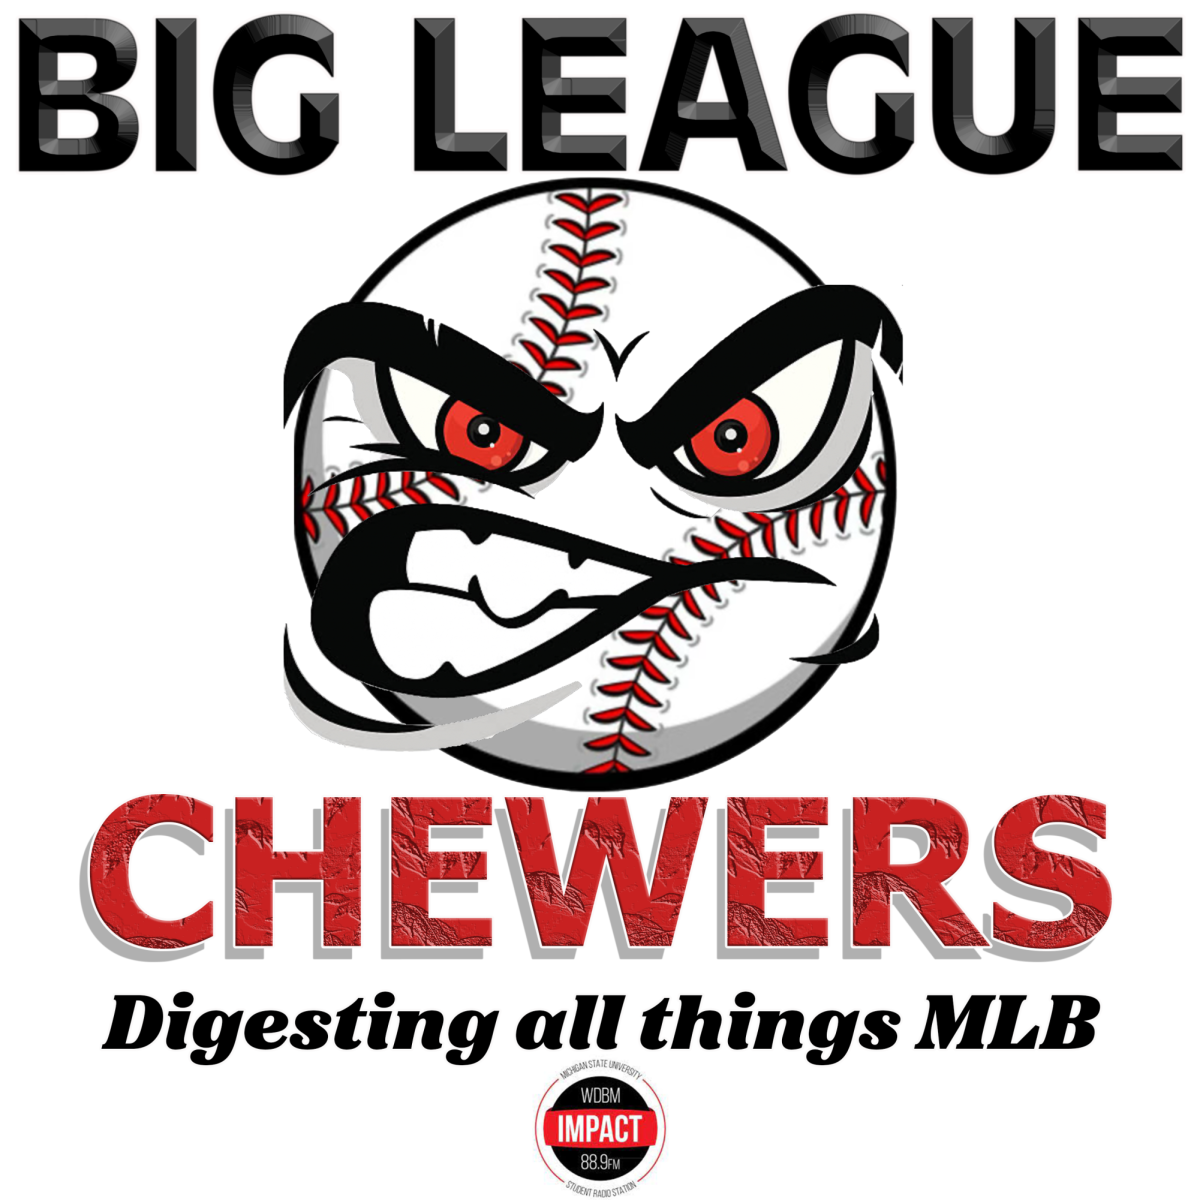 Big League Chewers – Ippei the Gambler, Opening Weekend Storylines & Predictions | Episode 1 |